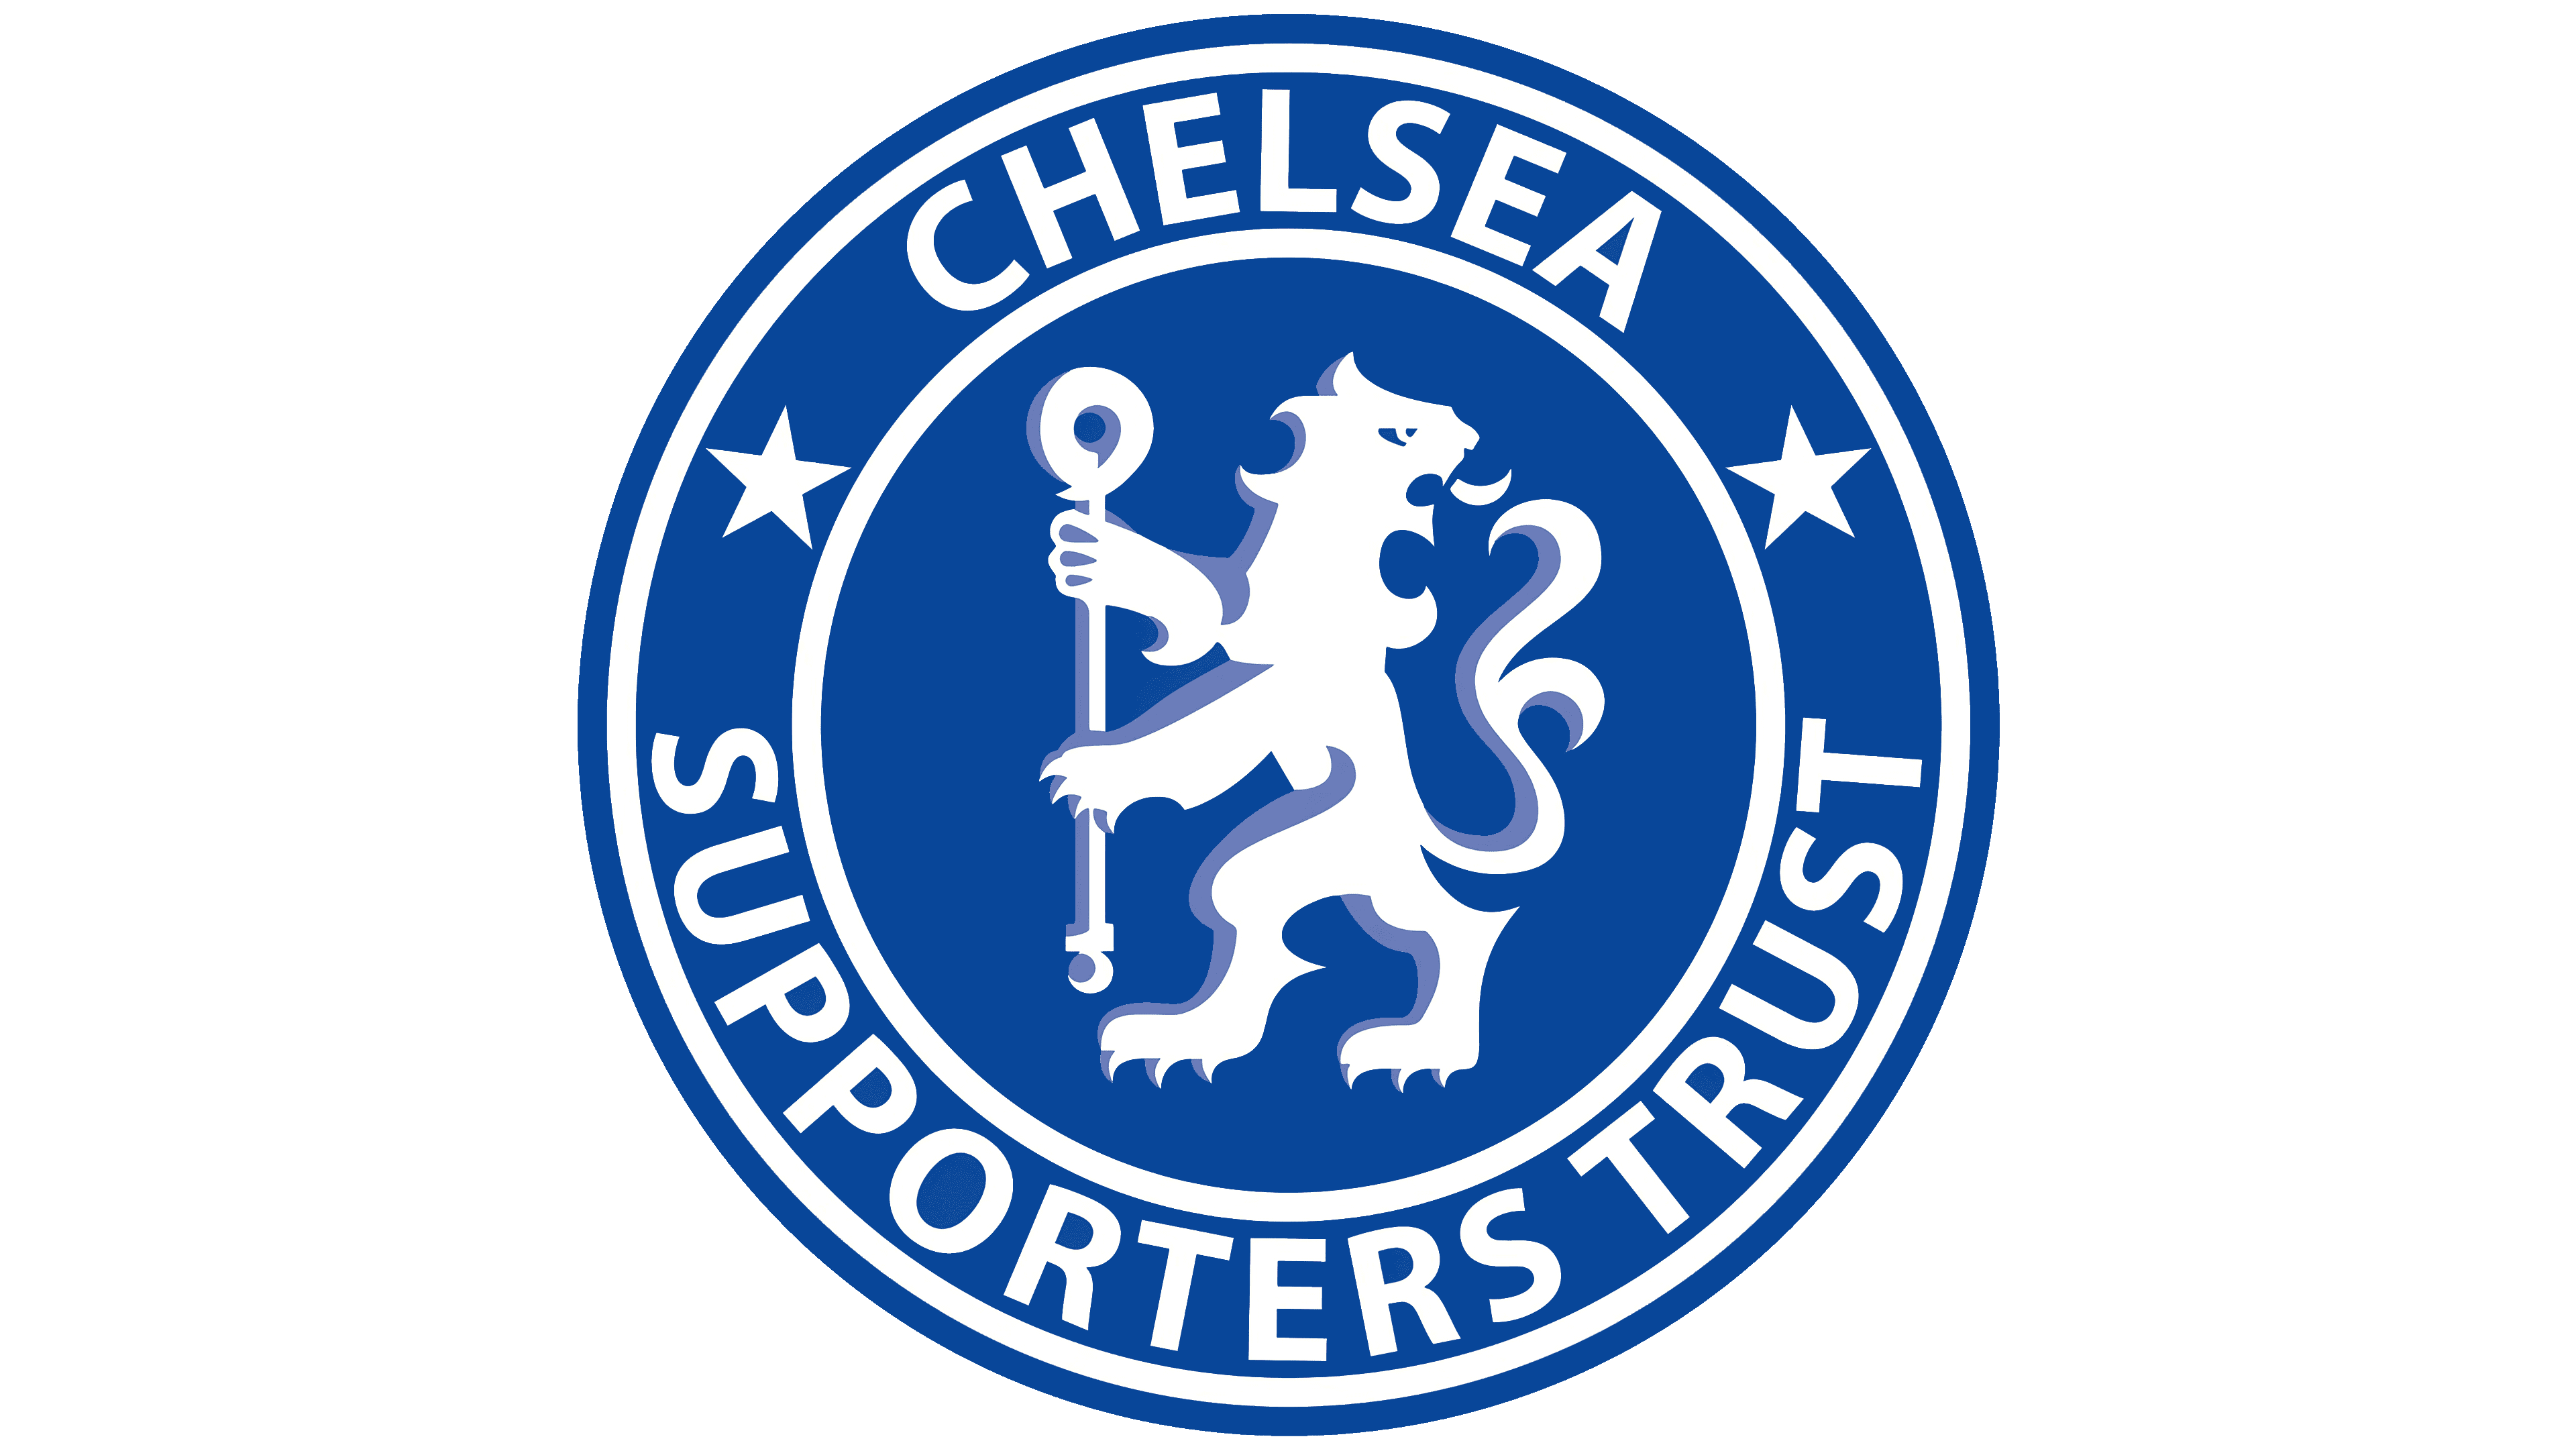 CST letter on Chelsea Football Club shirt sponsorship - Chelsea Supporters'  Trust